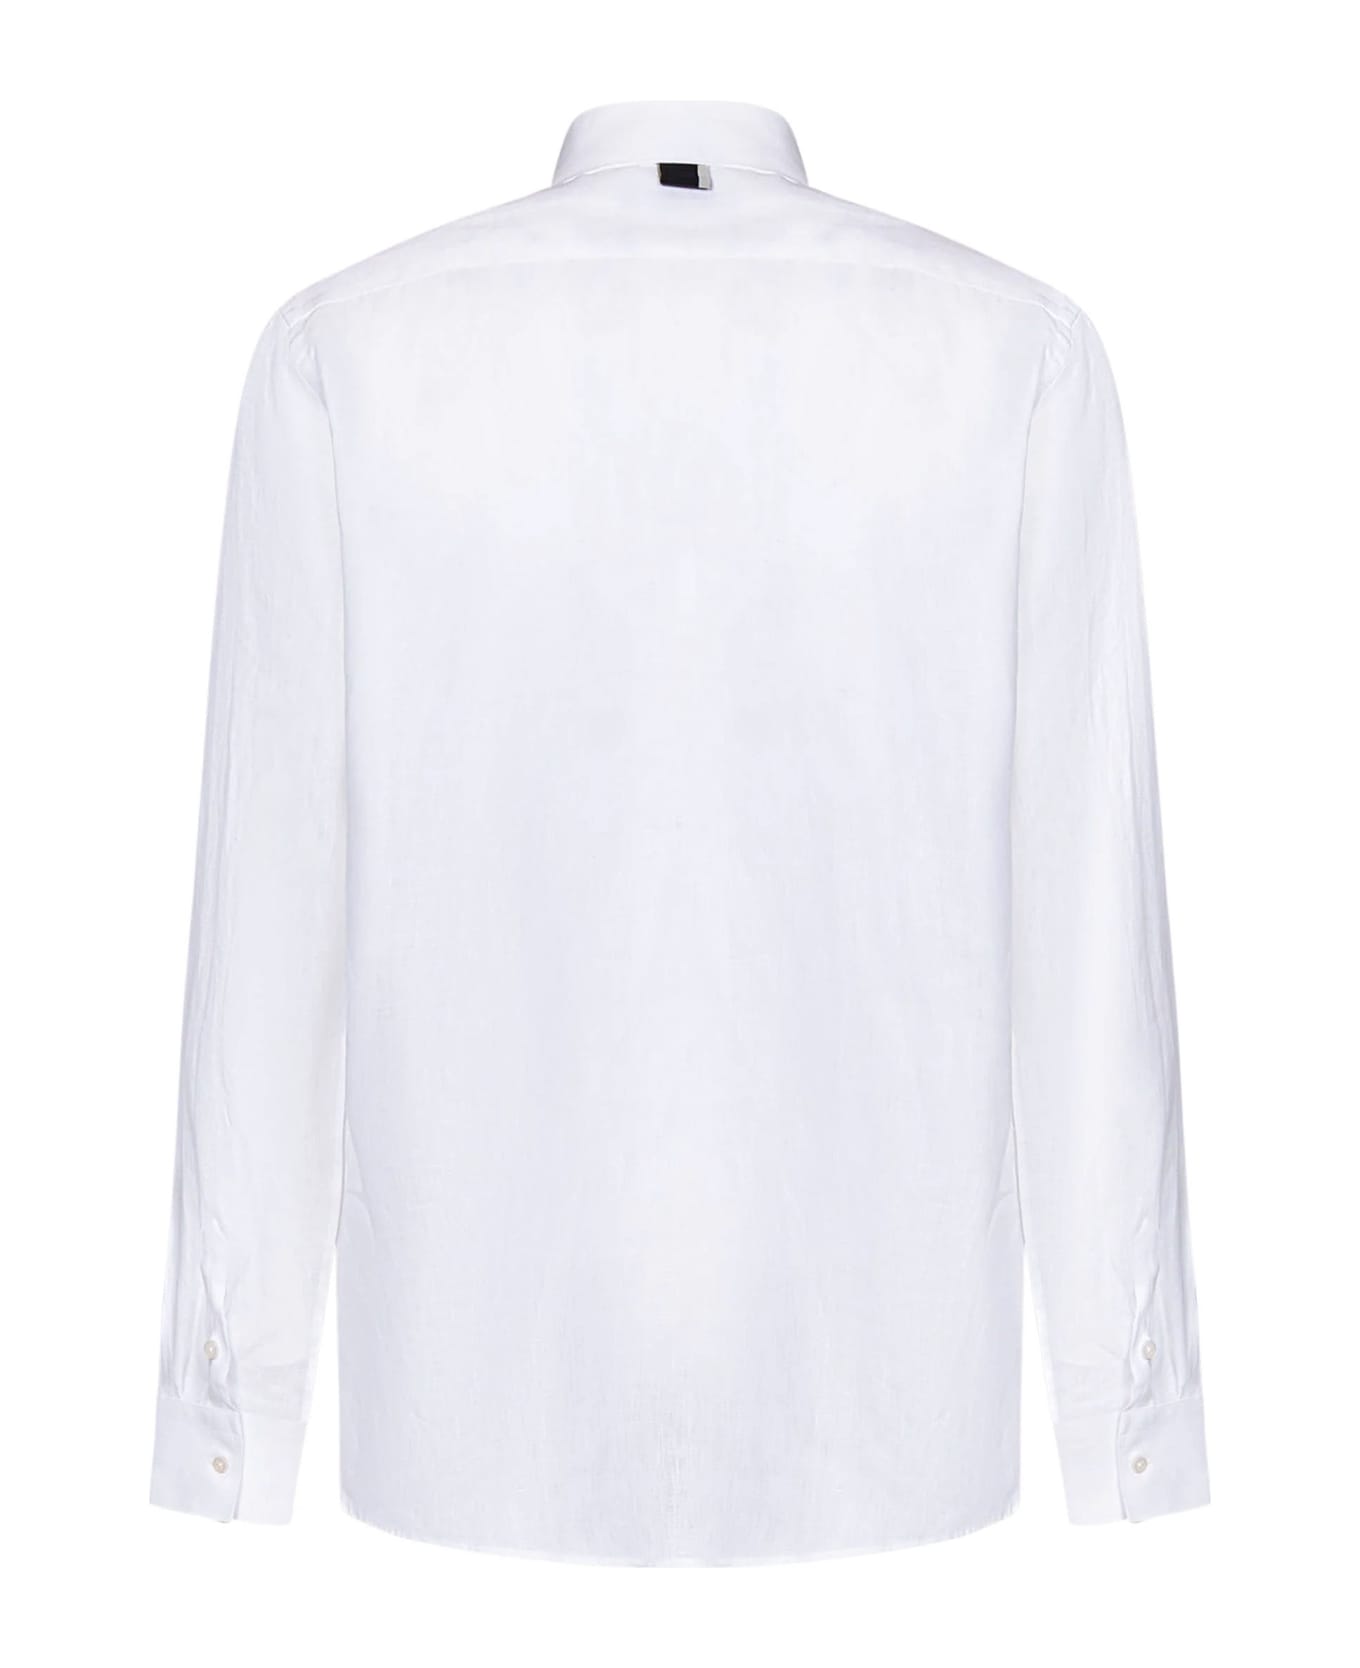 Low Brand Shirts White - White